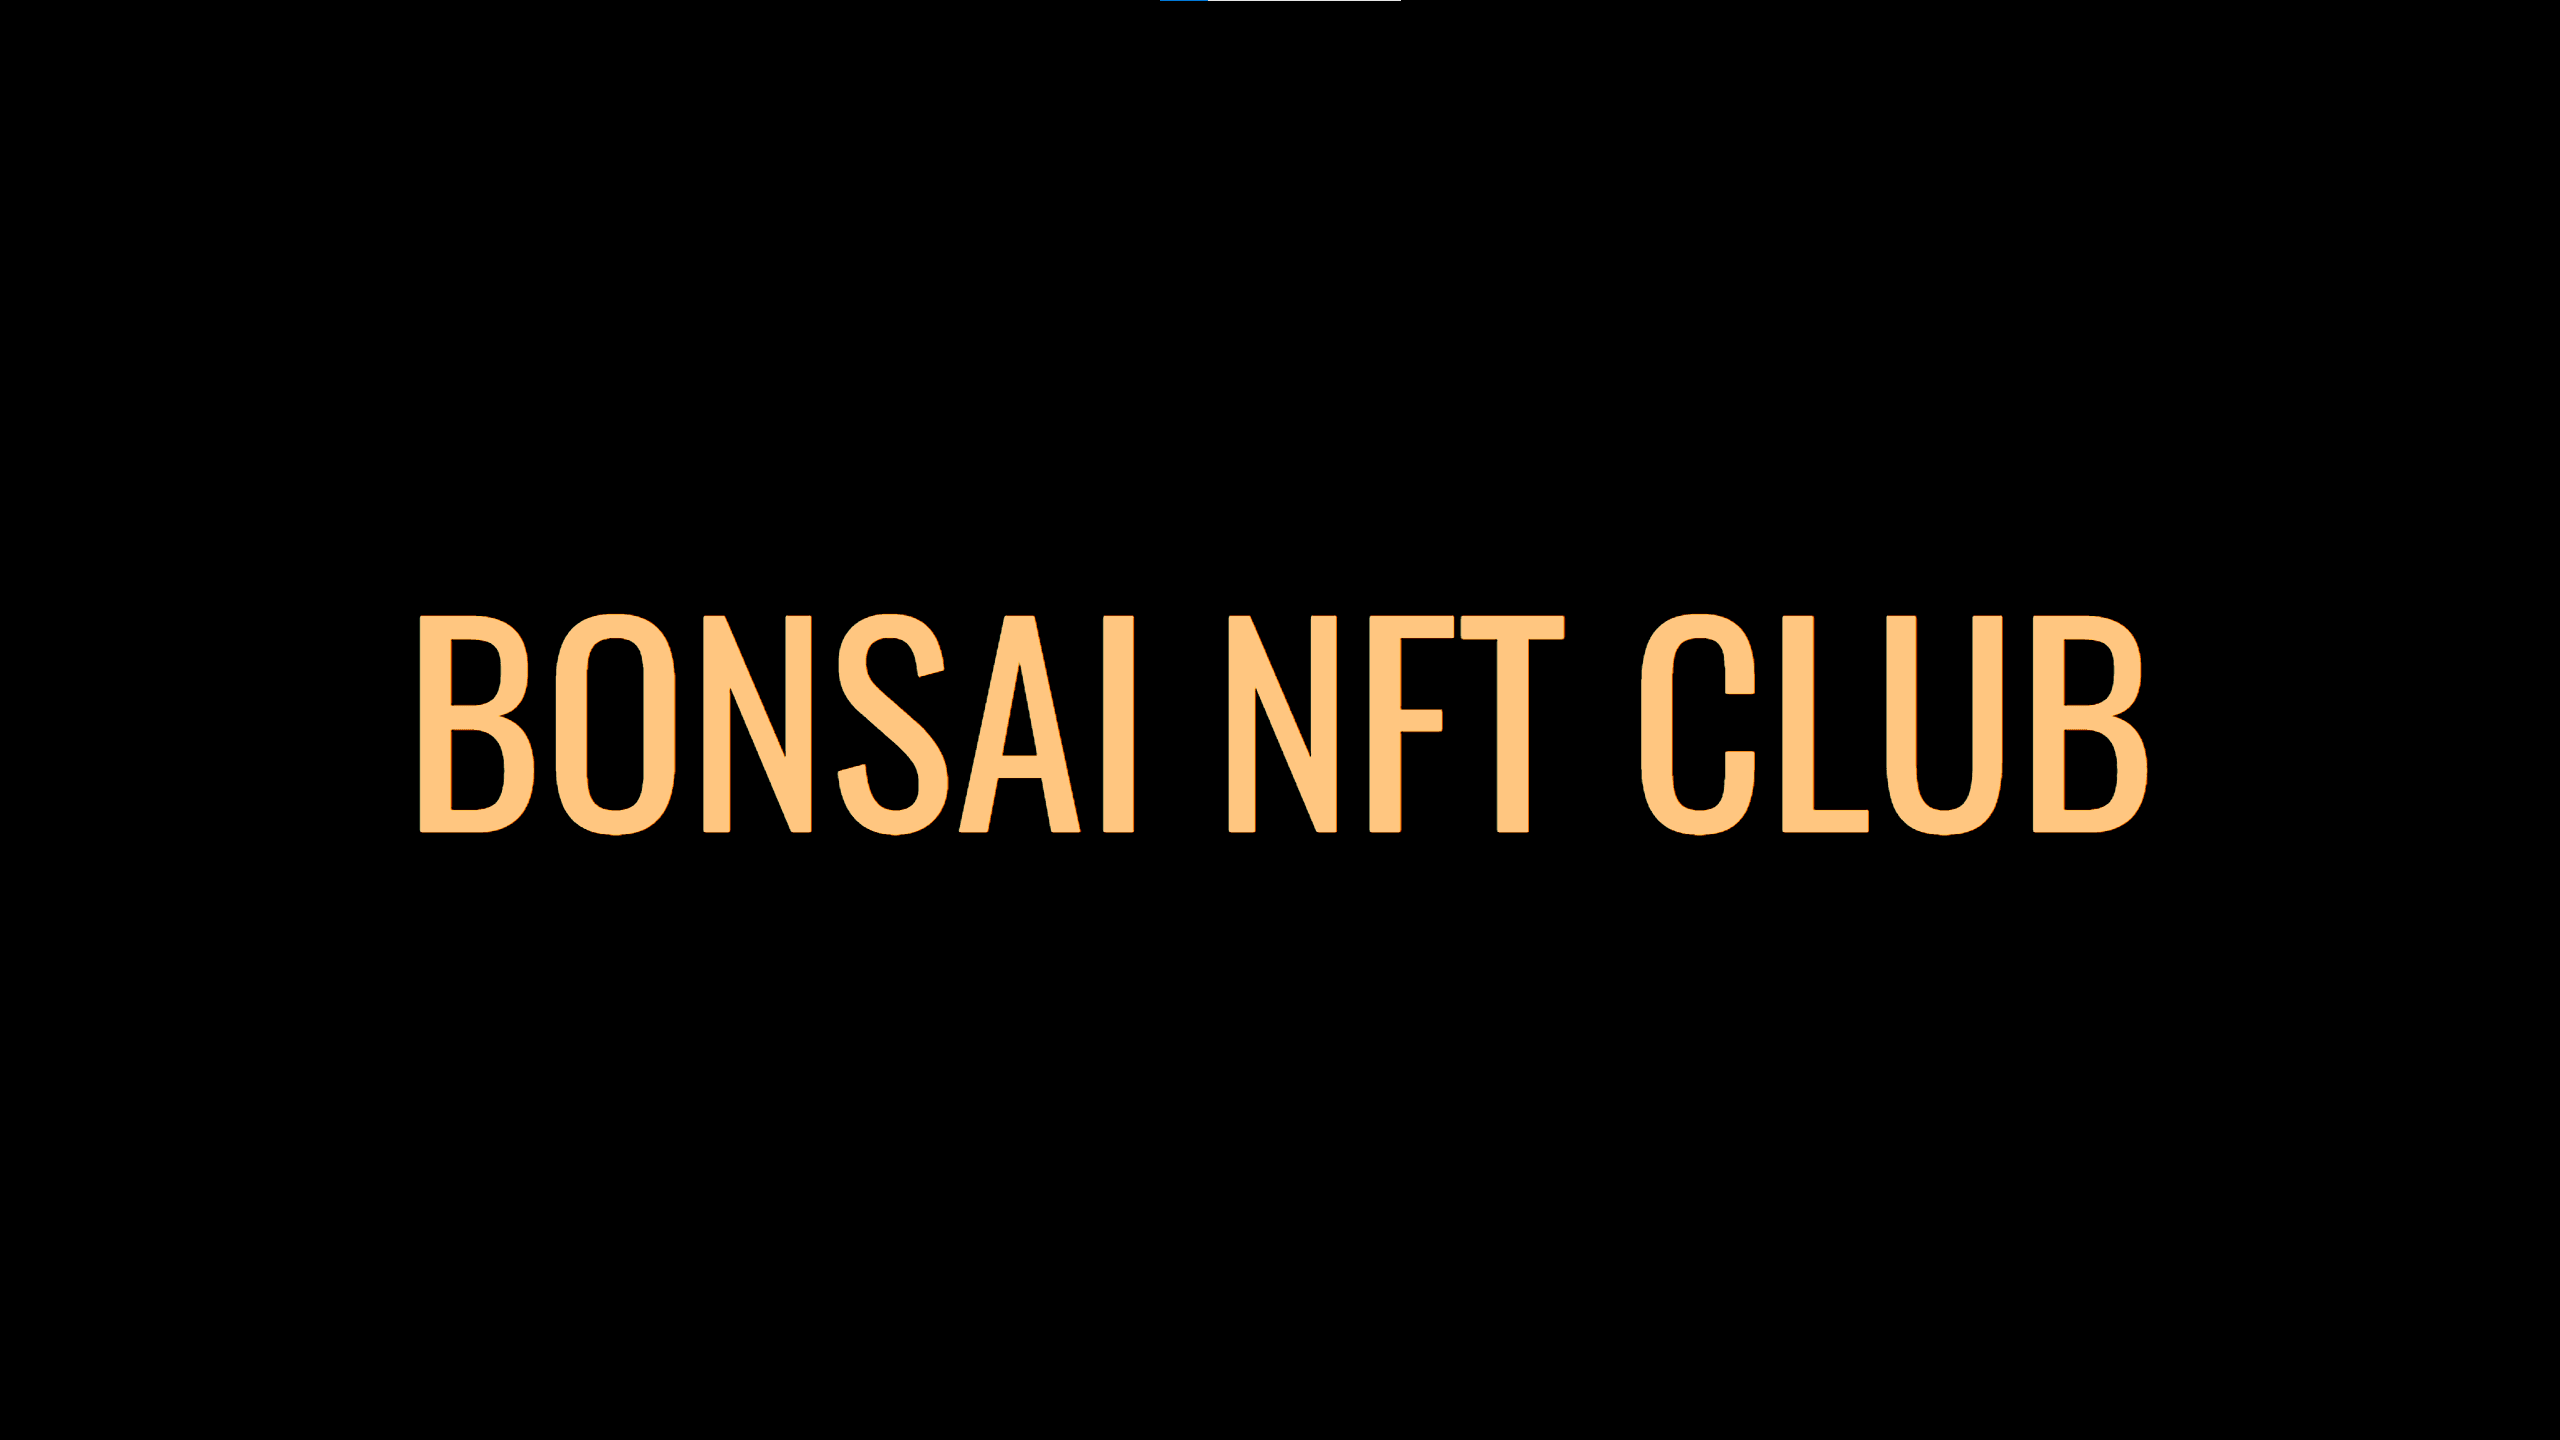 BONSAINFTCLUB banner